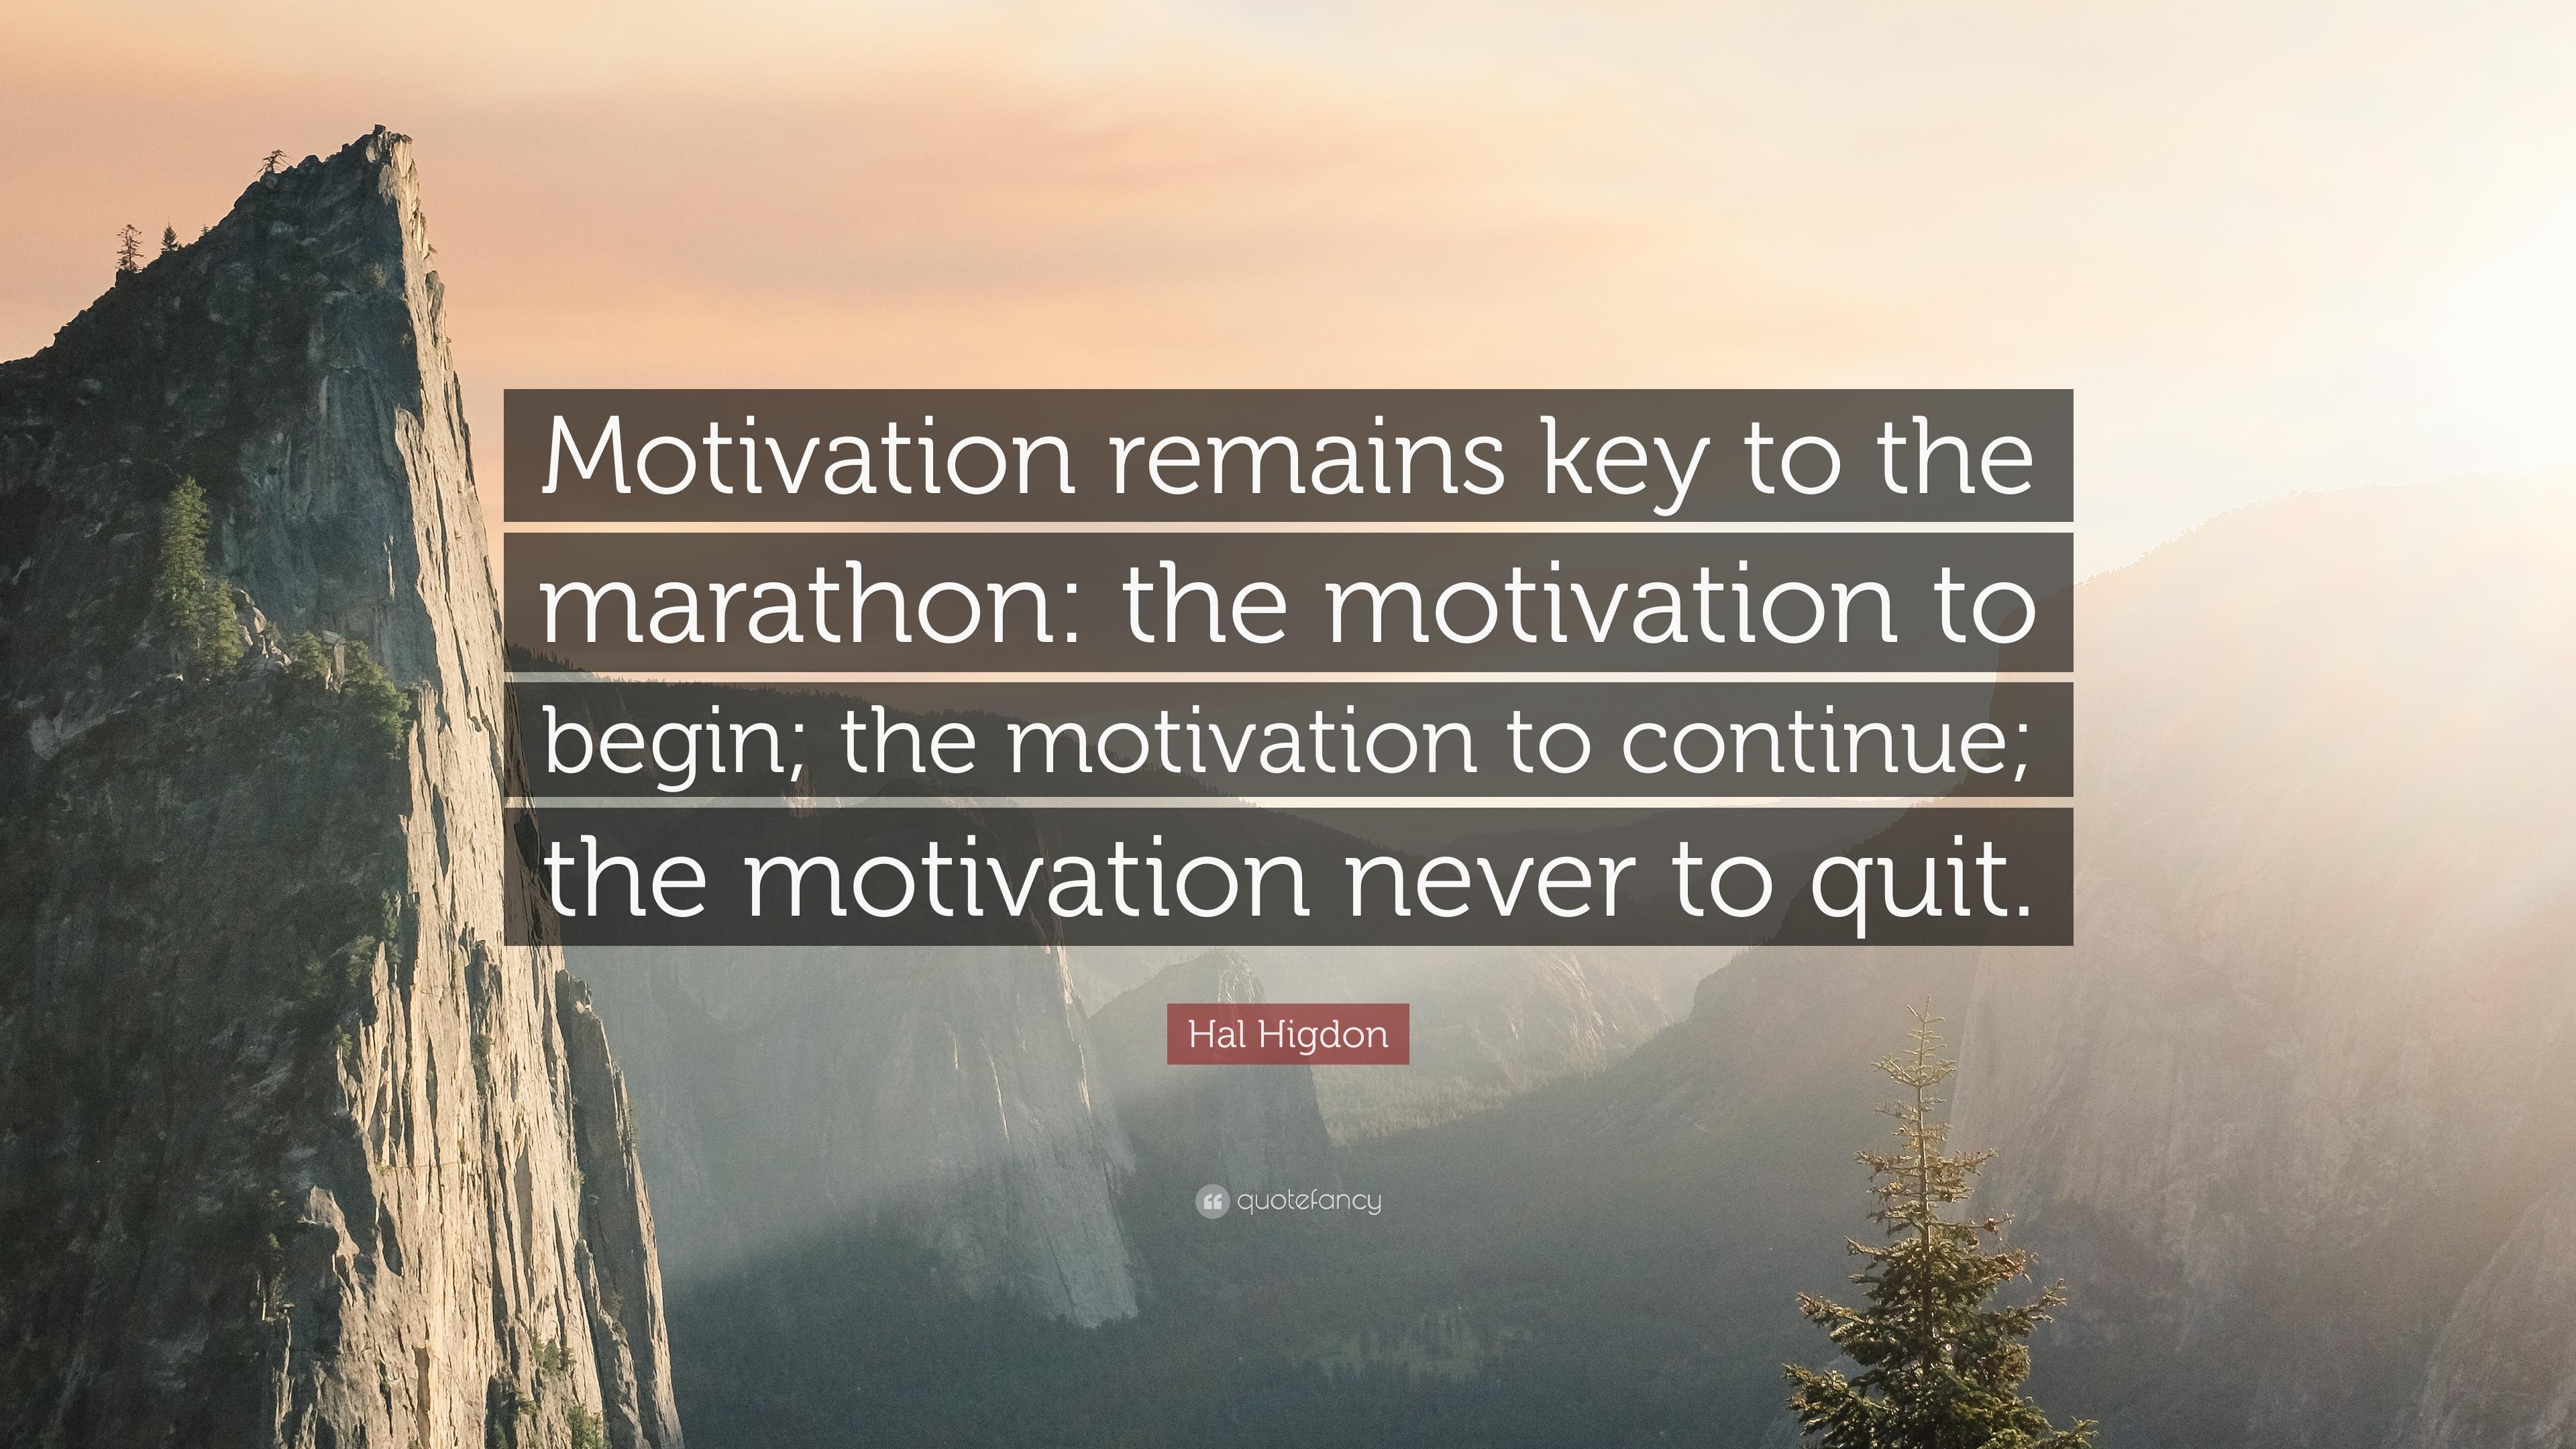 Hal Higdon Quote: “Motivation remains key to the marathon